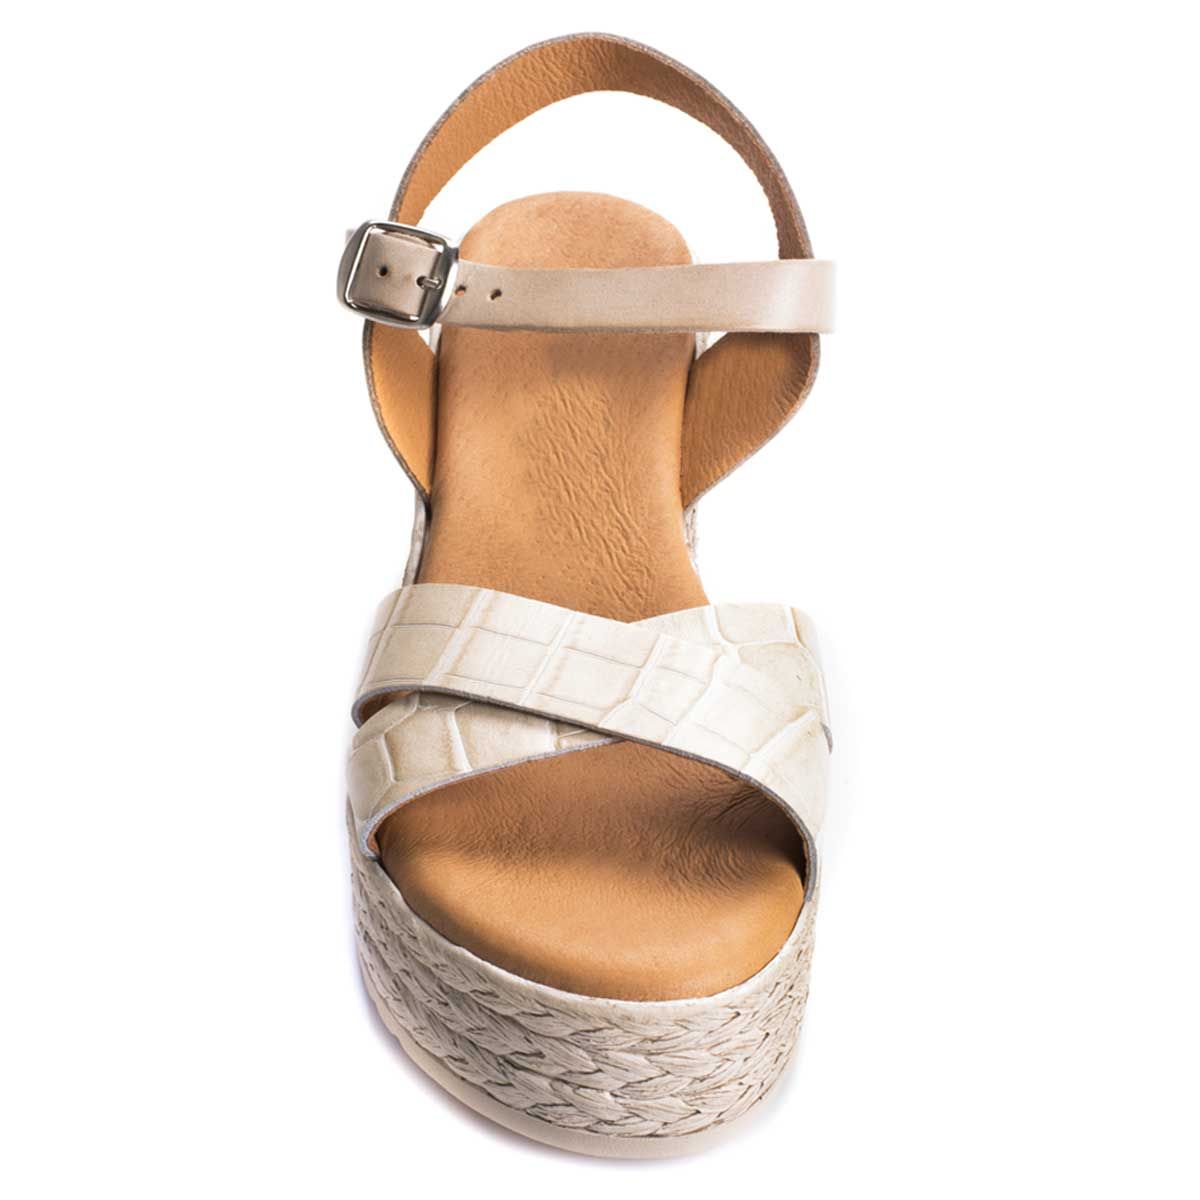 Purapiel Platform Sandal in Camel